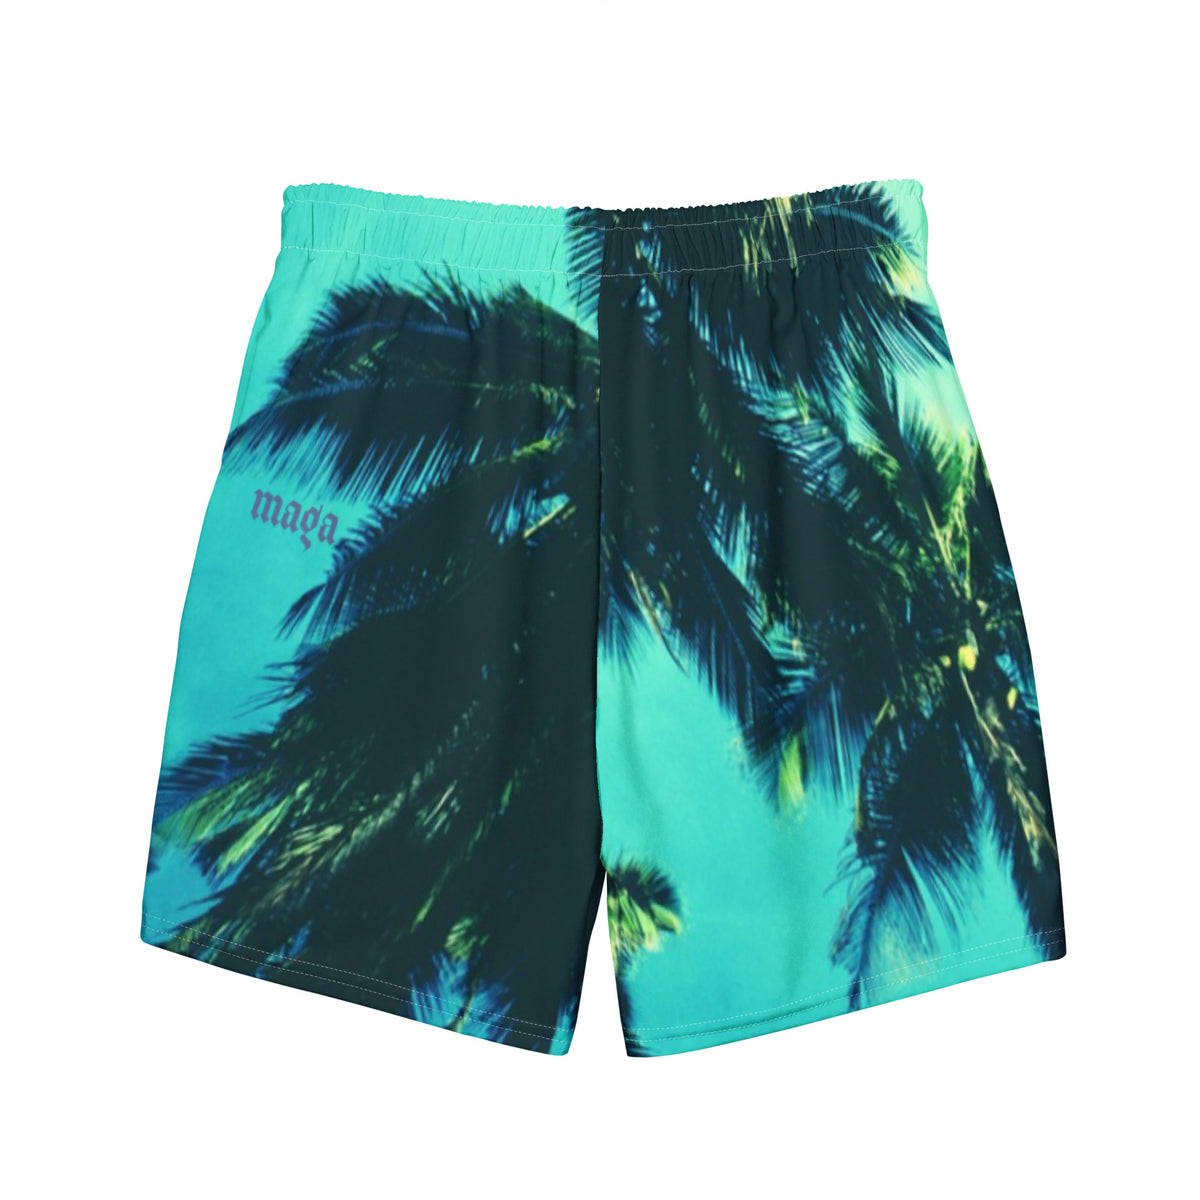 MAGA Palm Tree Men's swim trunks